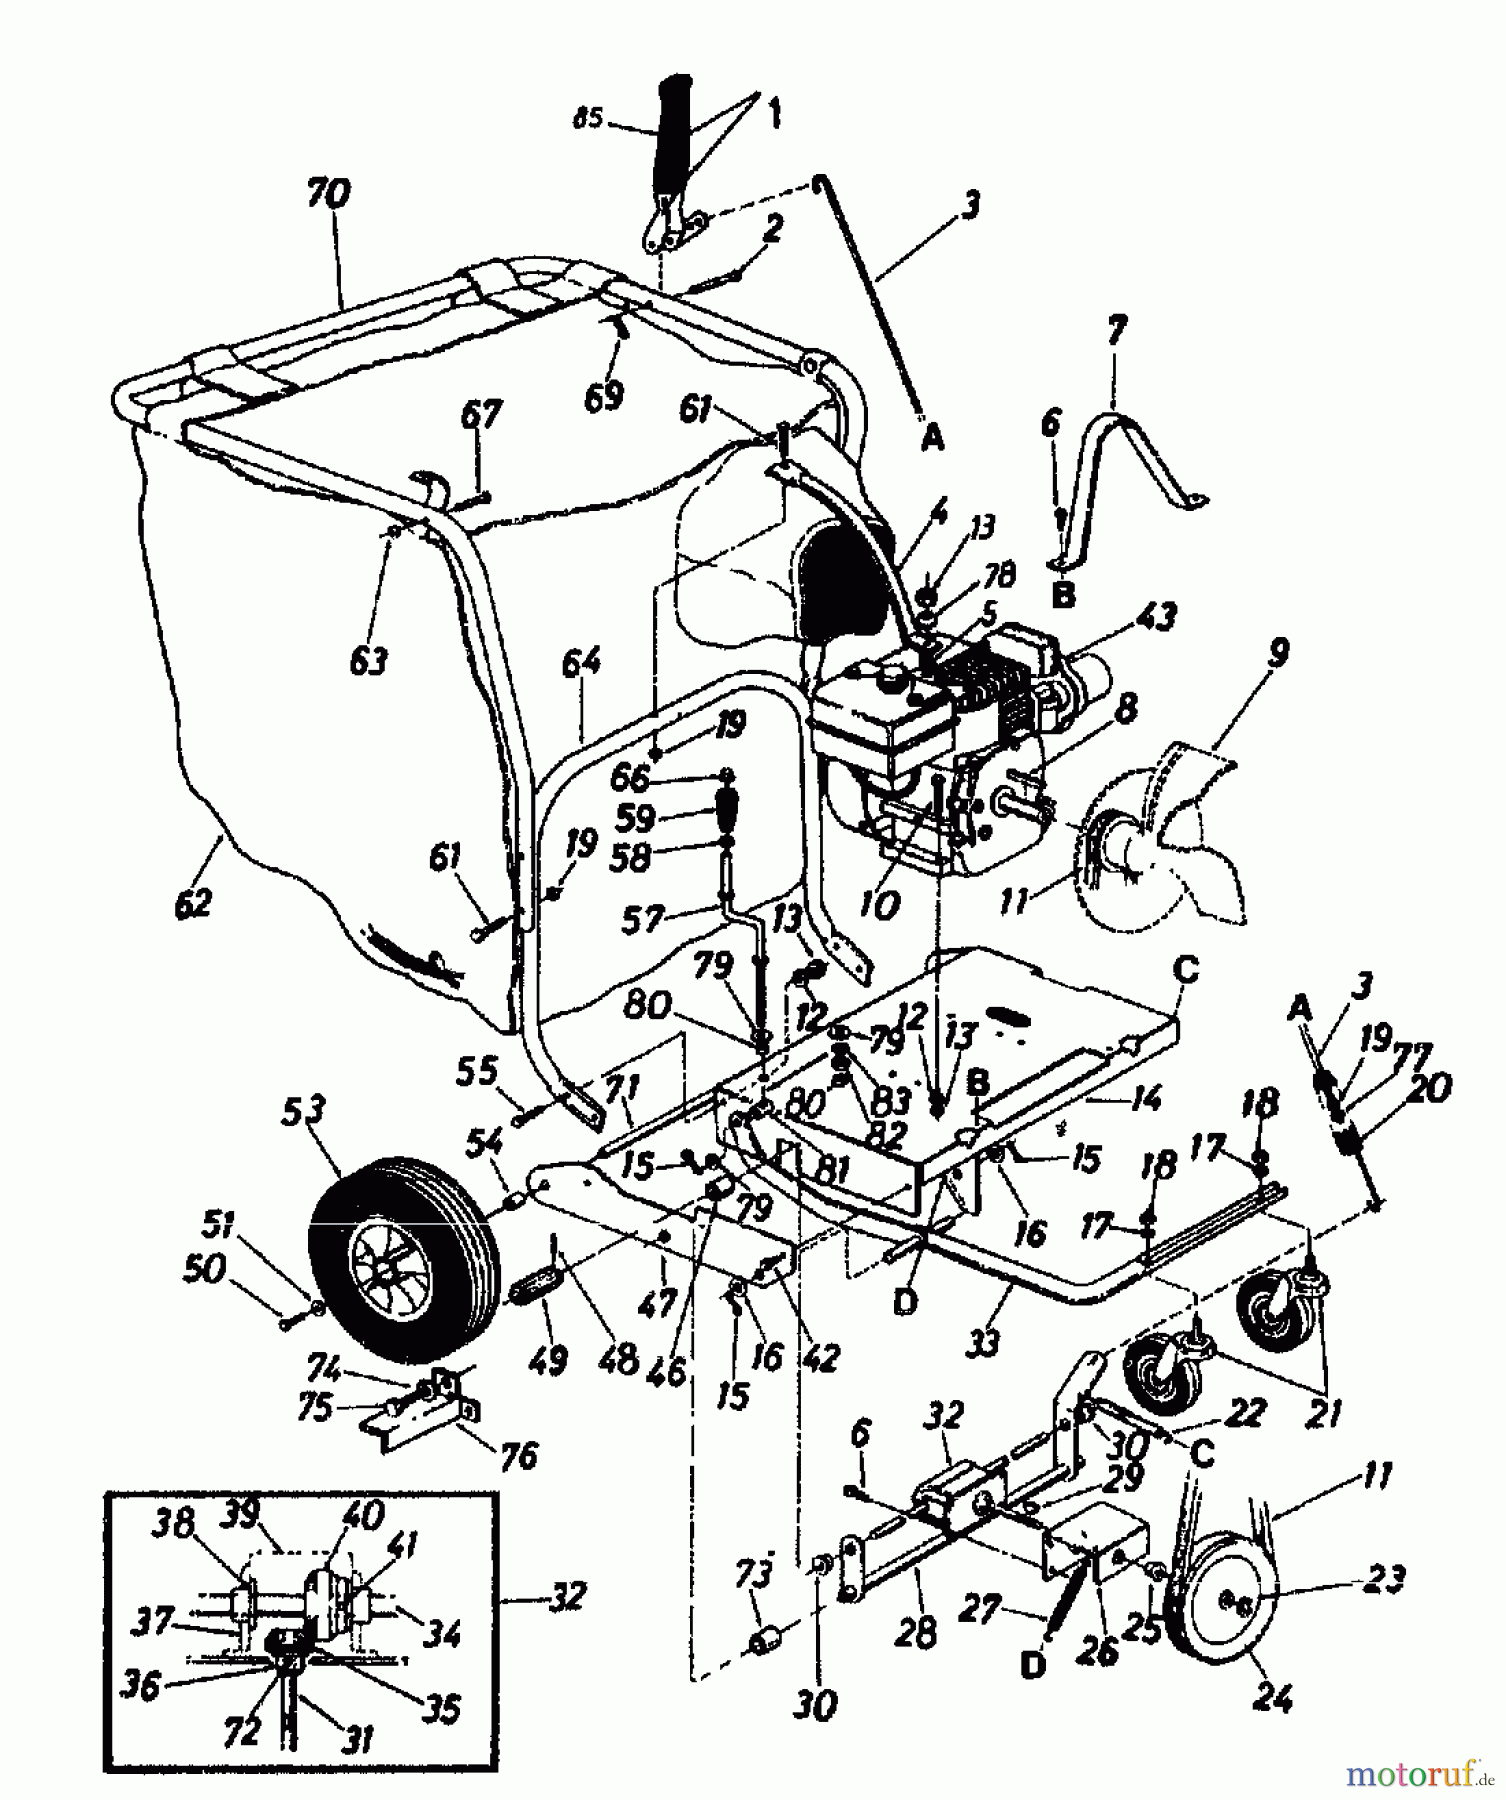  Gutbrod Souffleur de feuille, Aspirateur de feuille LS 76-50 04201.01  (1996) Machine de base